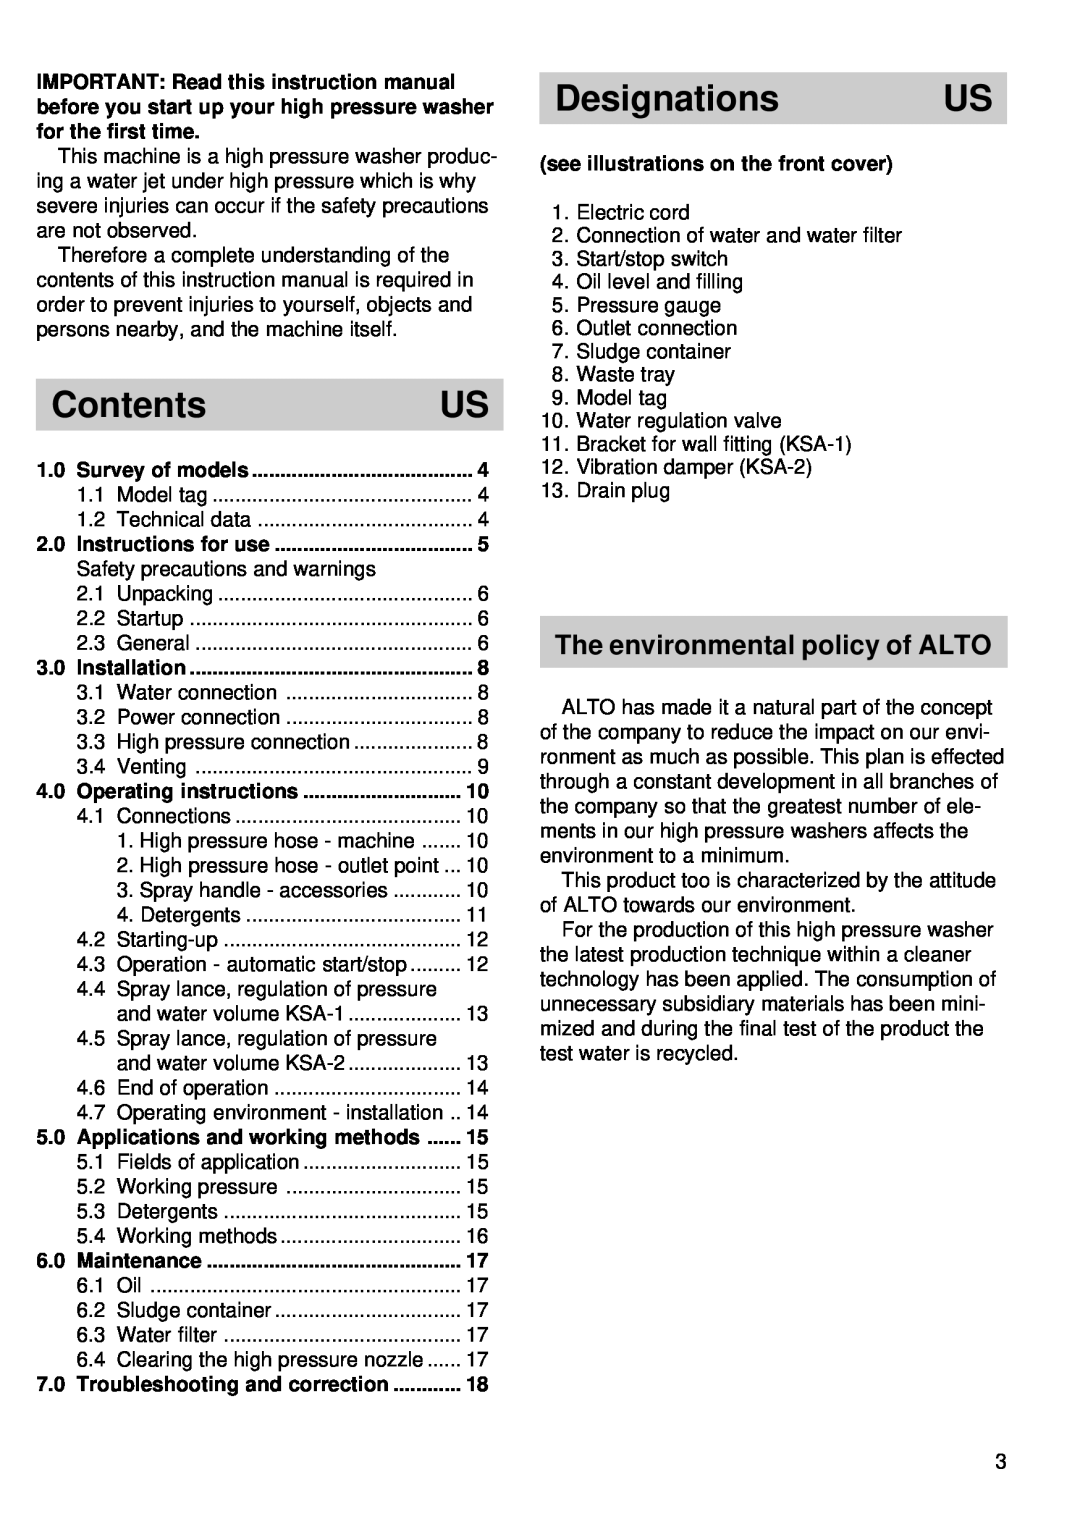 Alto-Shaam 52C3KSA -1, 52C3KSA -2 manual Contents, Designations US, The environmental policy of ALTO 